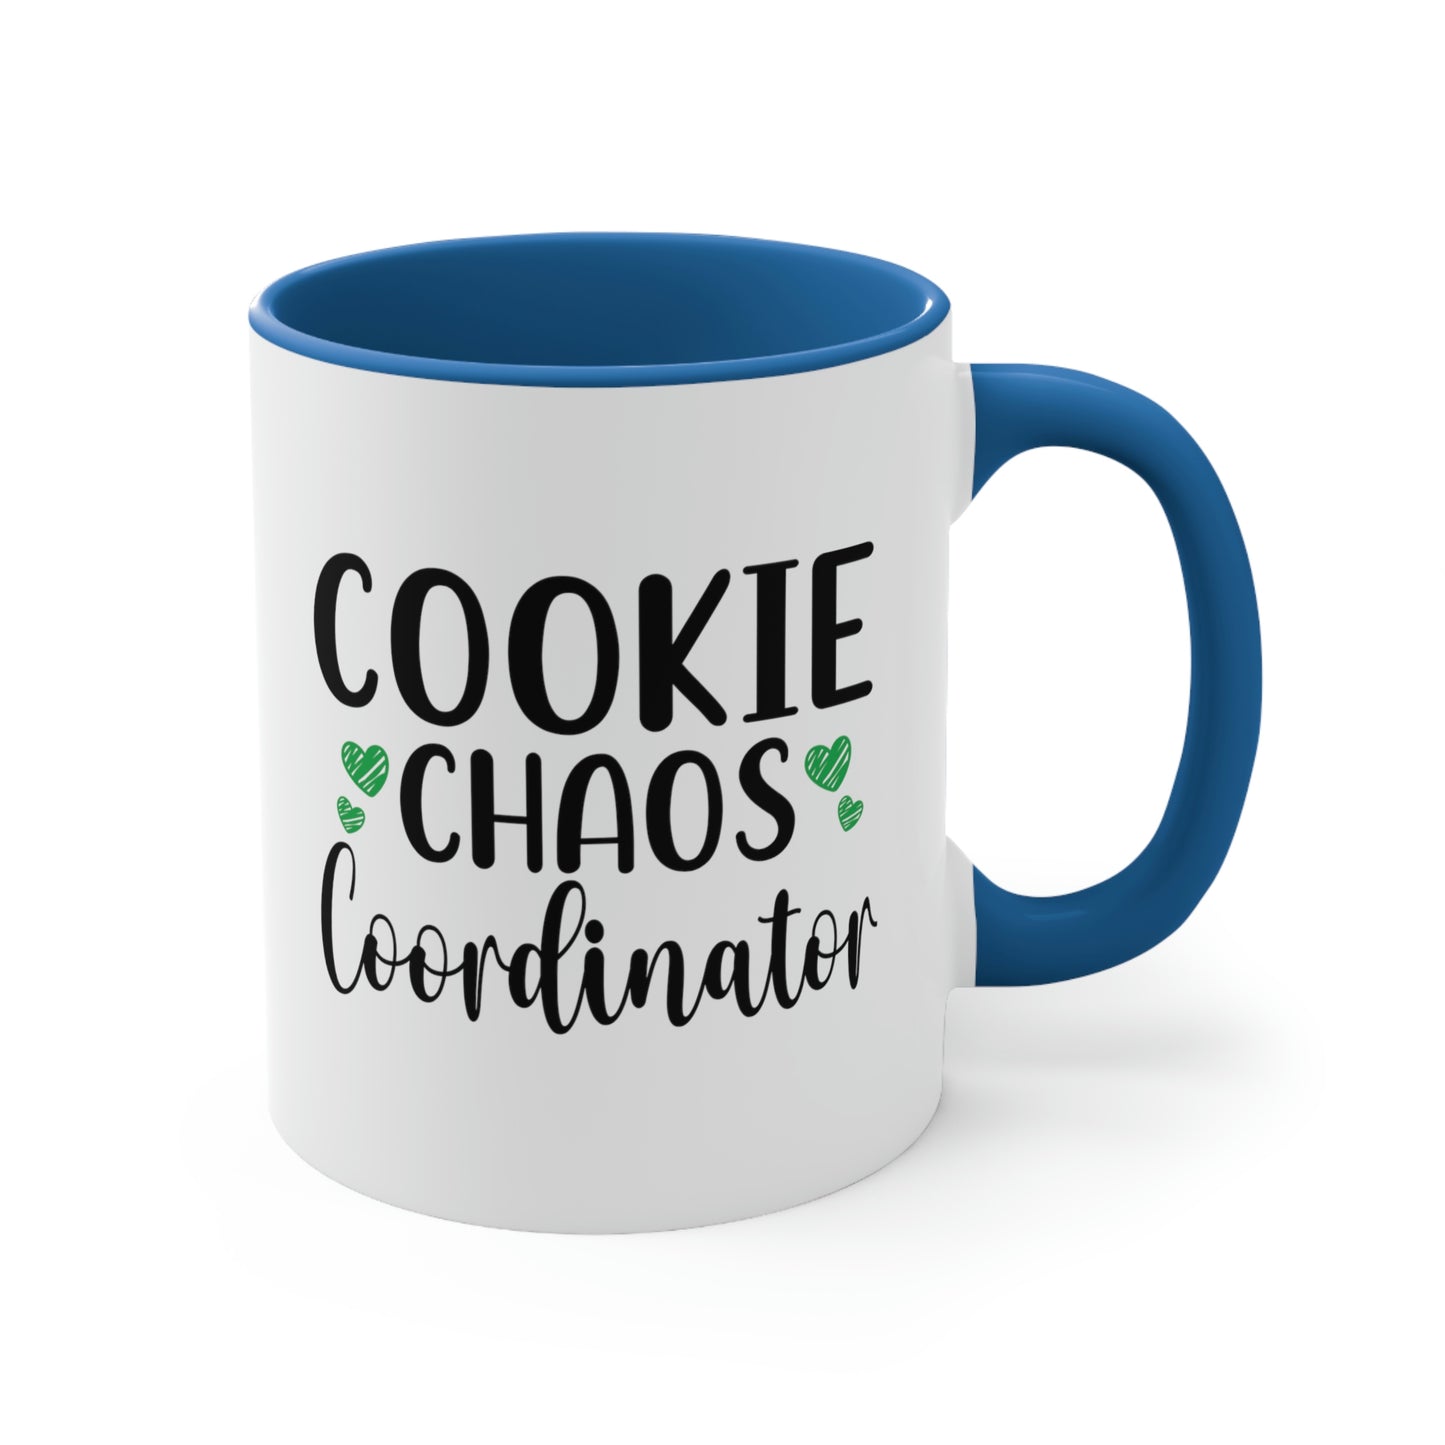 Cookie Chaos Coordinator Mug